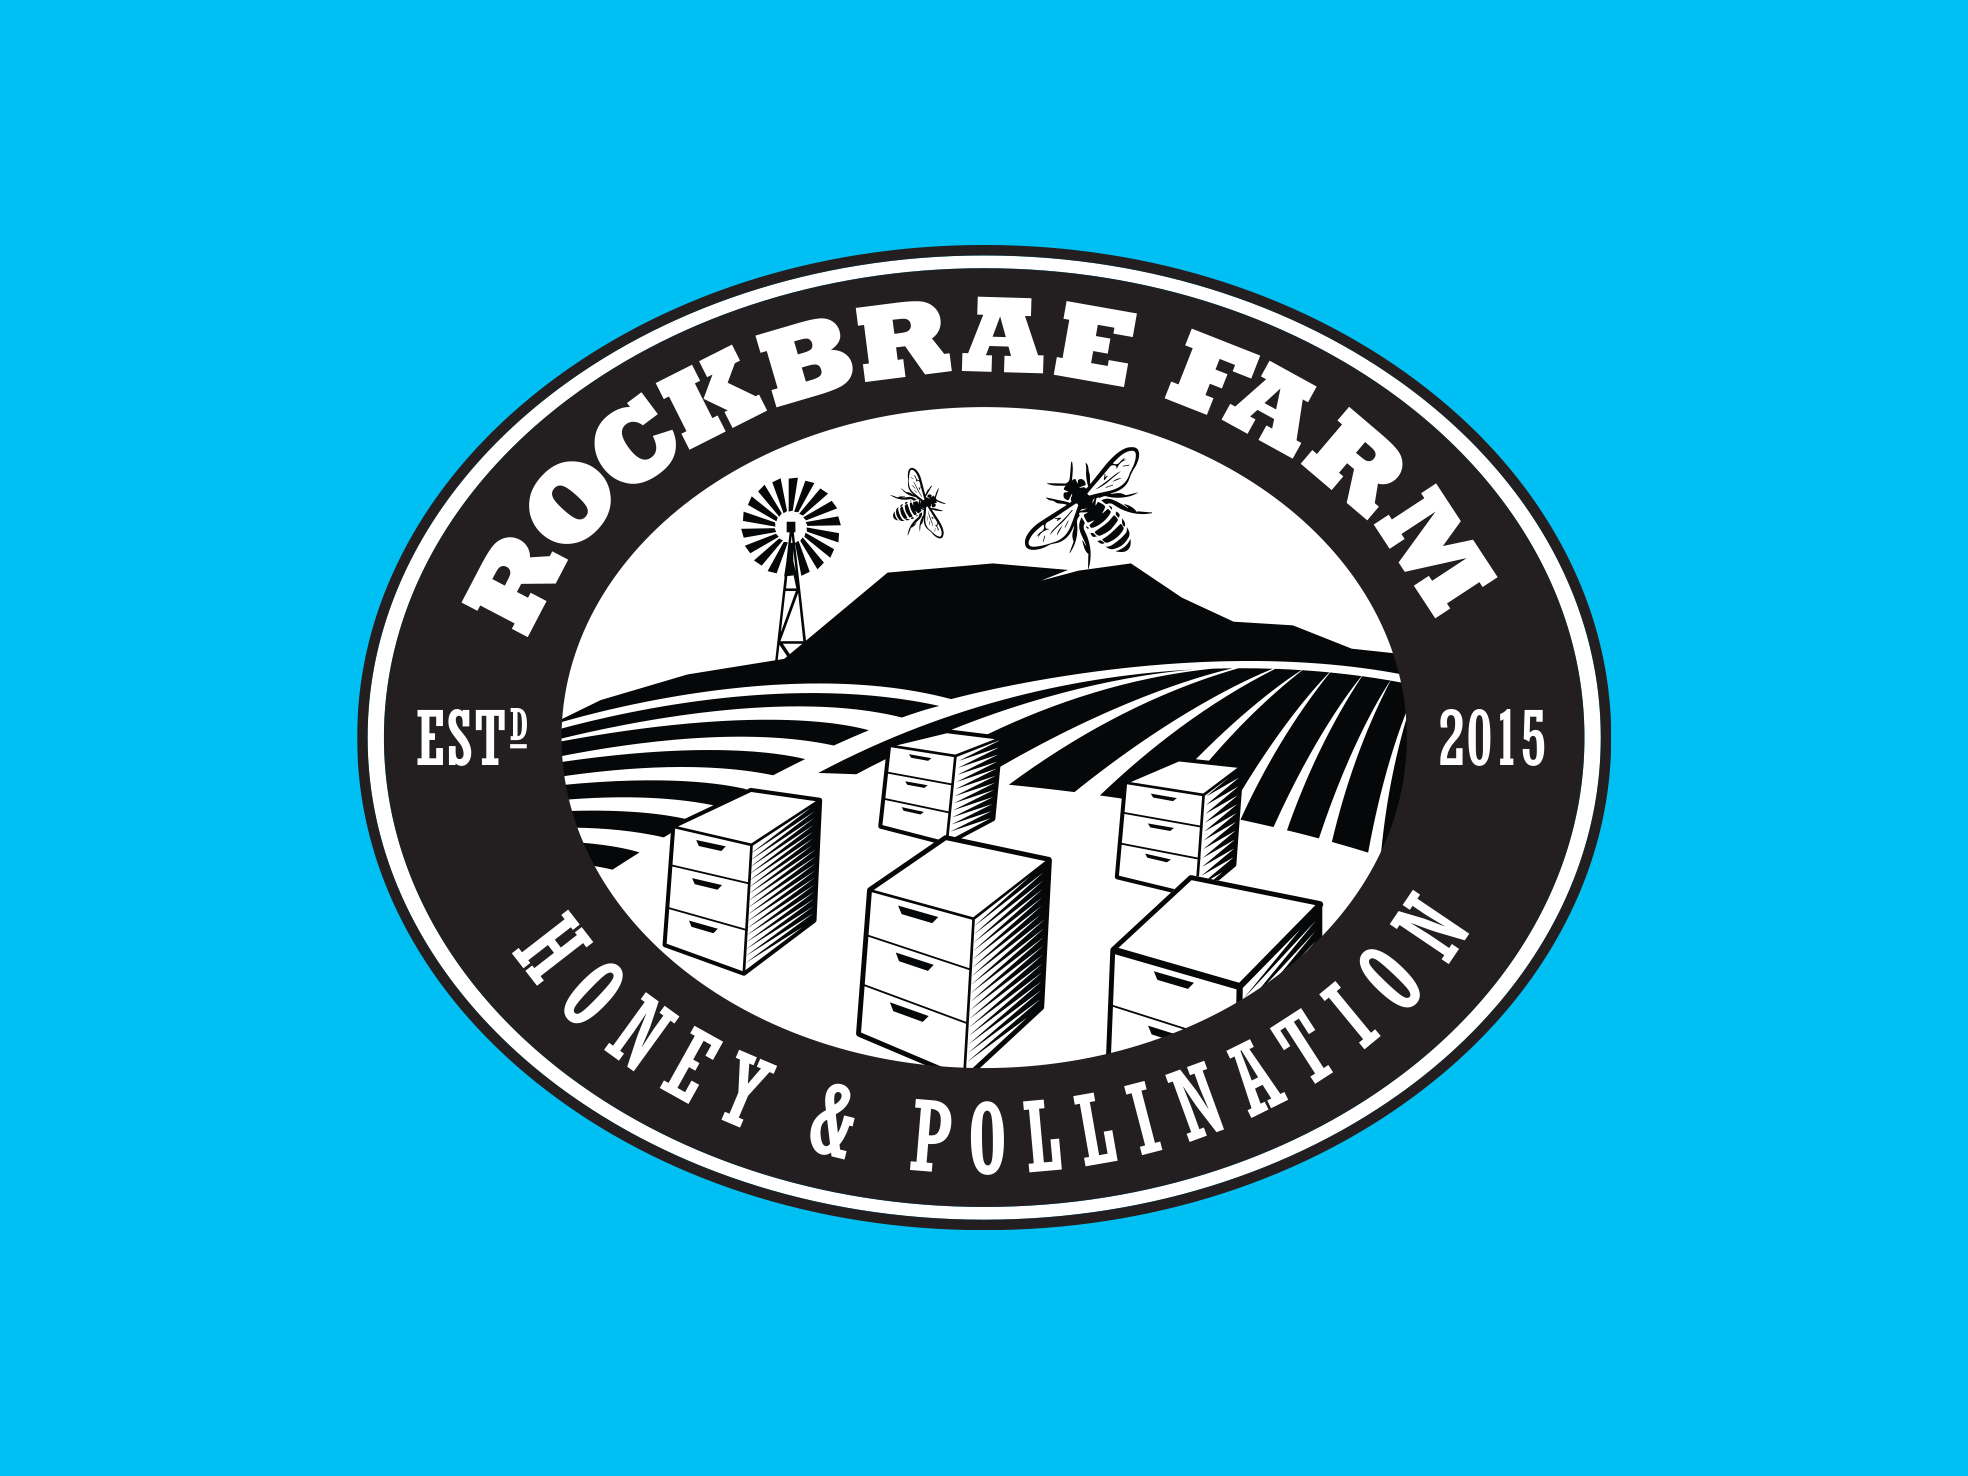 Image of the final Rockbrae farm logo